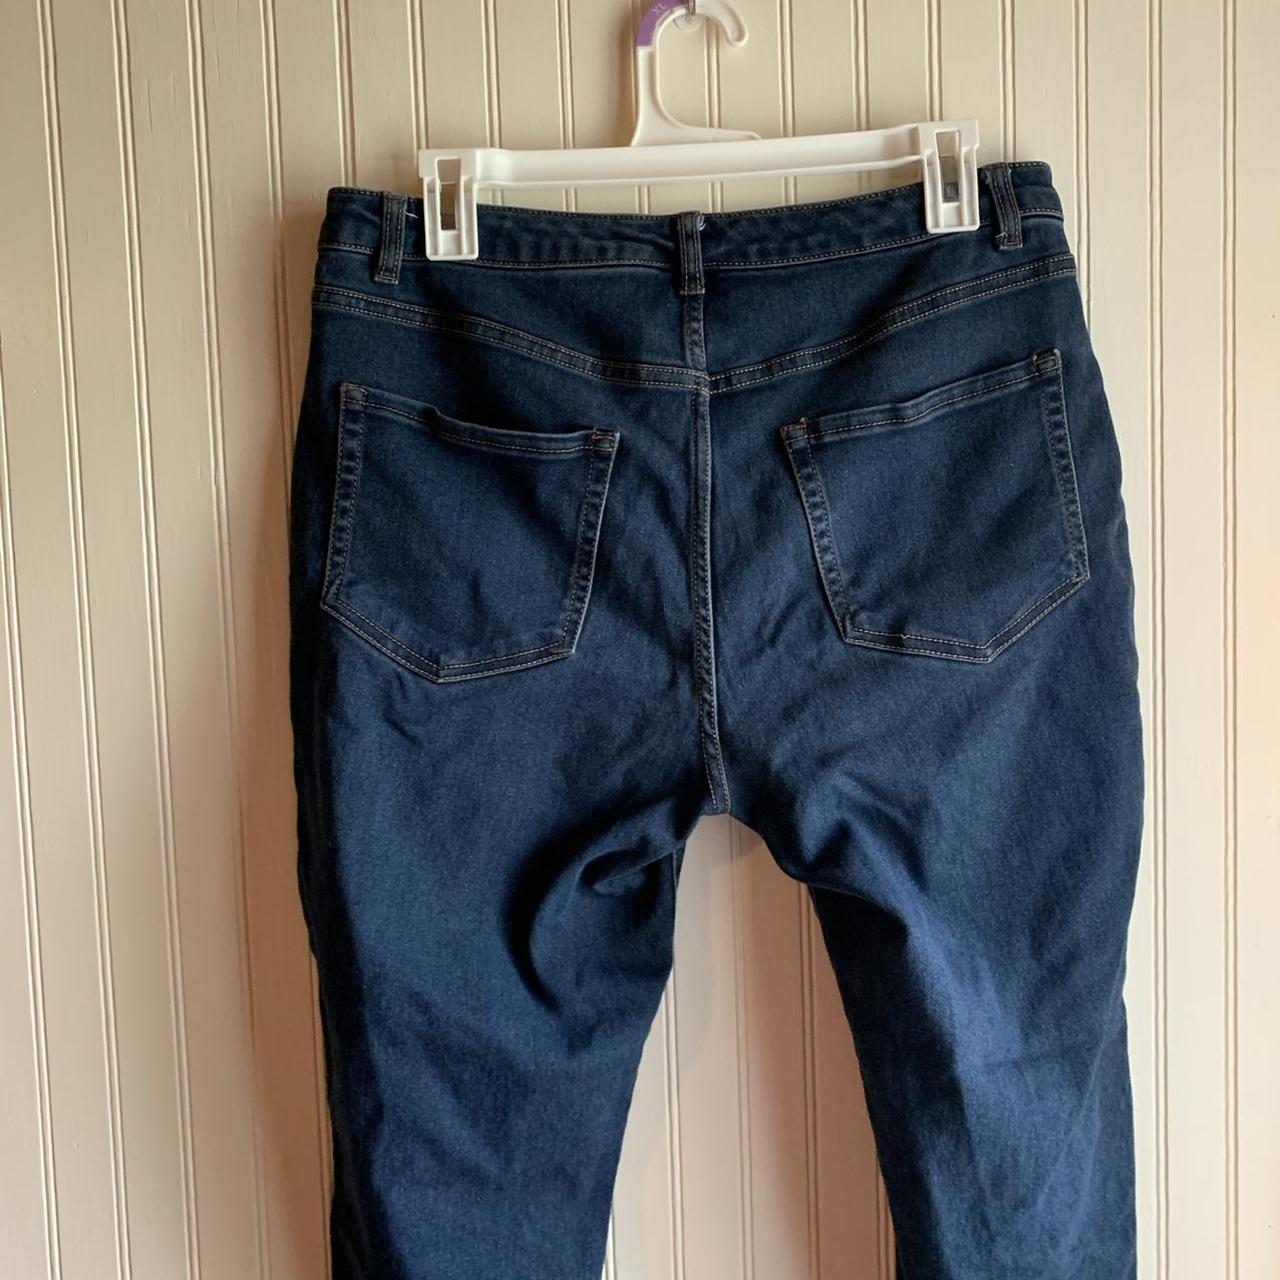 Product Image 4 - Cute dark Wash skinny jeans.